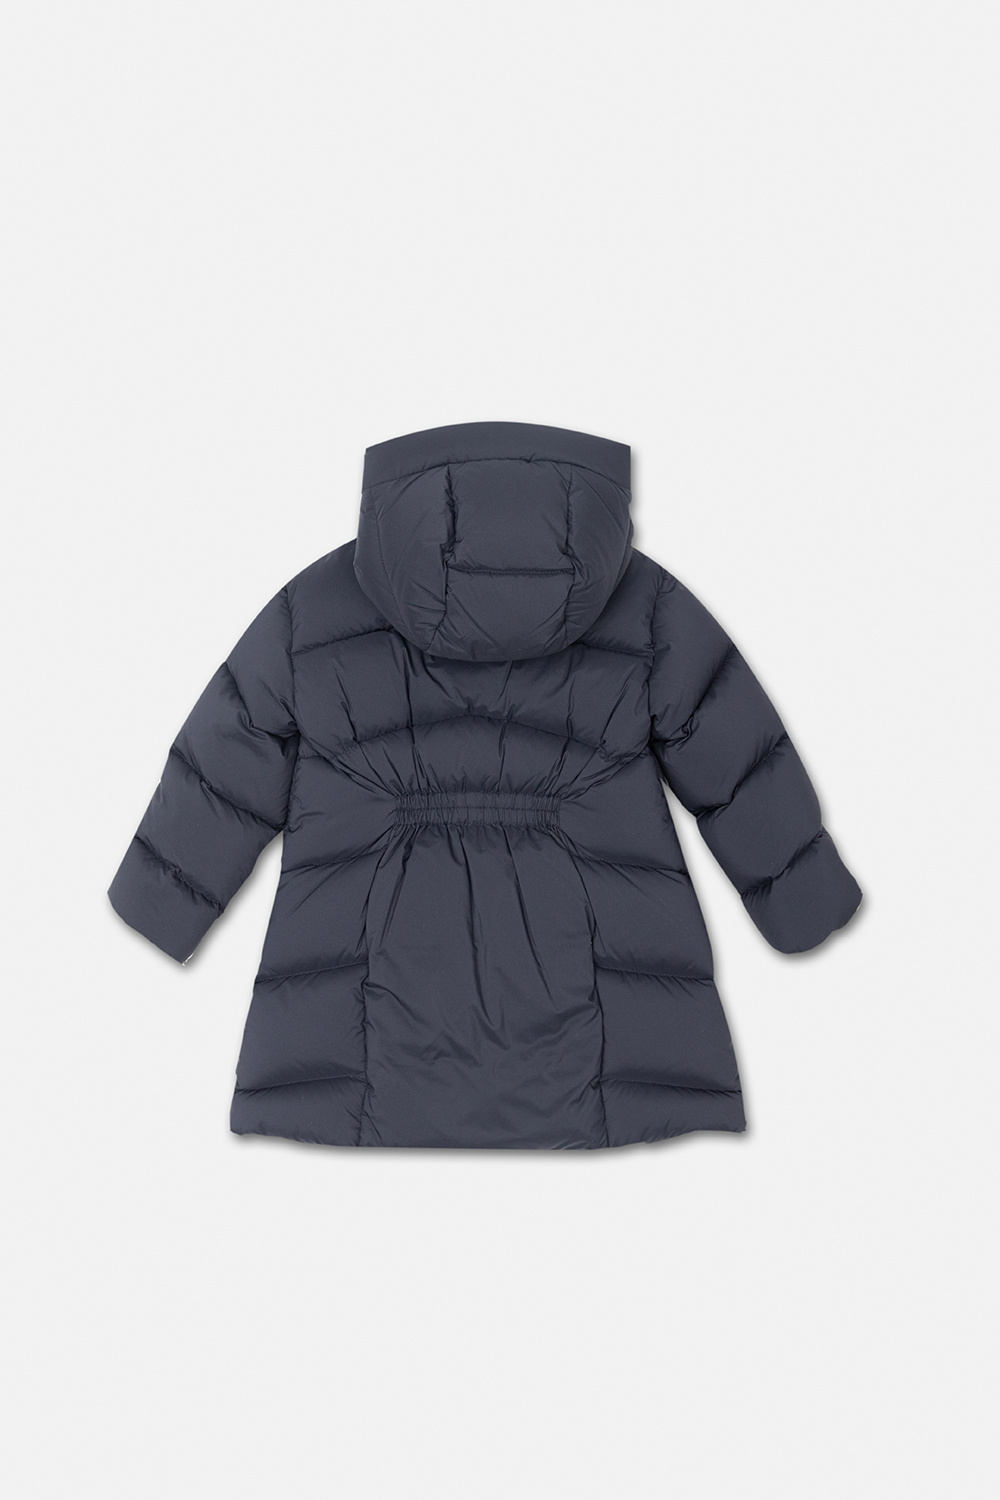 Moncler Enfant ‘Pesha’ REISS jacket